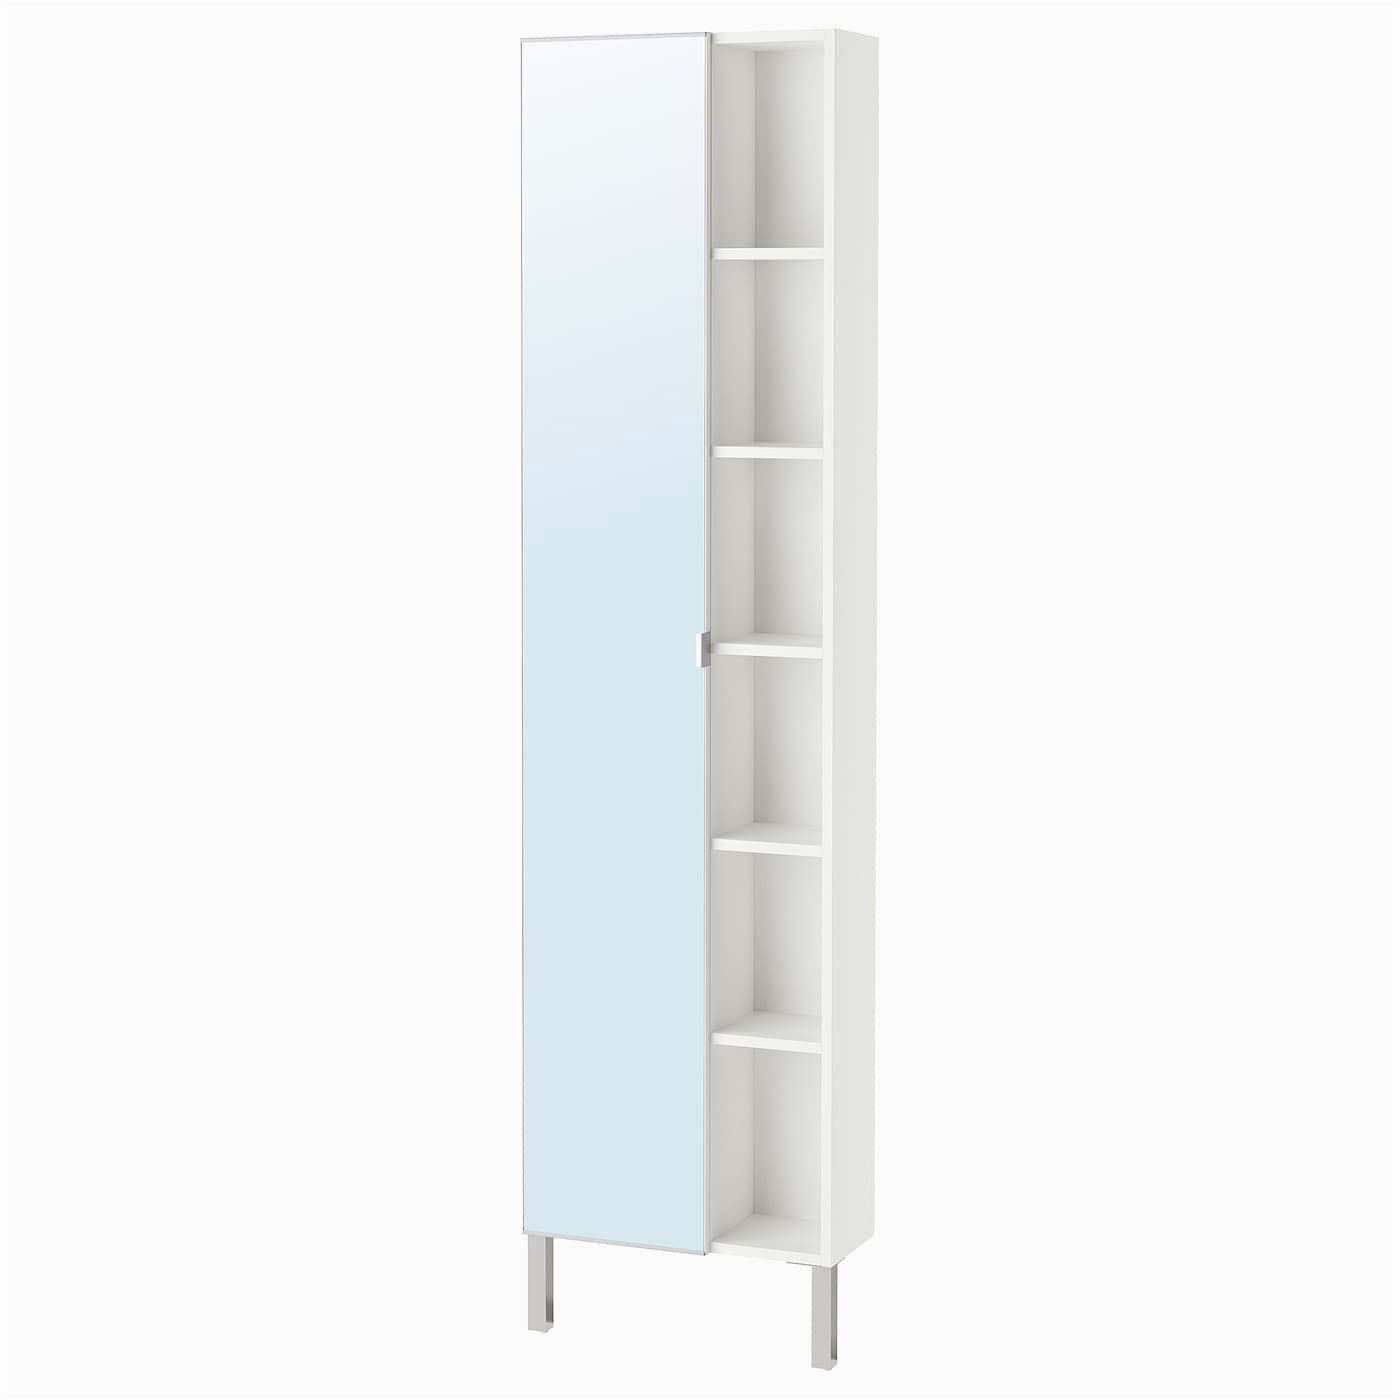 Ikea Badezimmer Schrank Spiegel Lillngen Spiegelschrank 1 Tür 1 Abschlregal Weiß Ikea